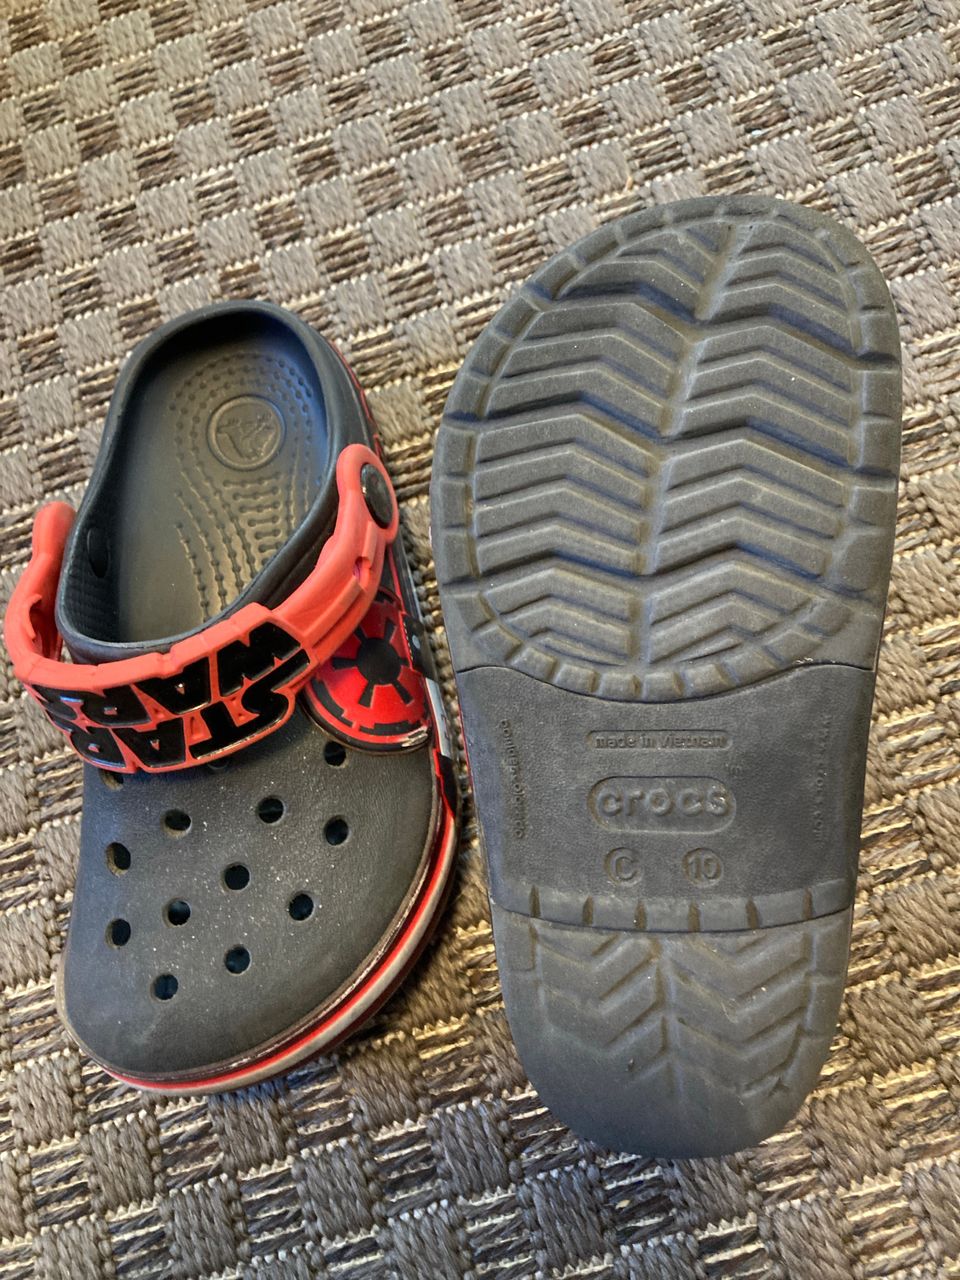 Star wars crocs c10